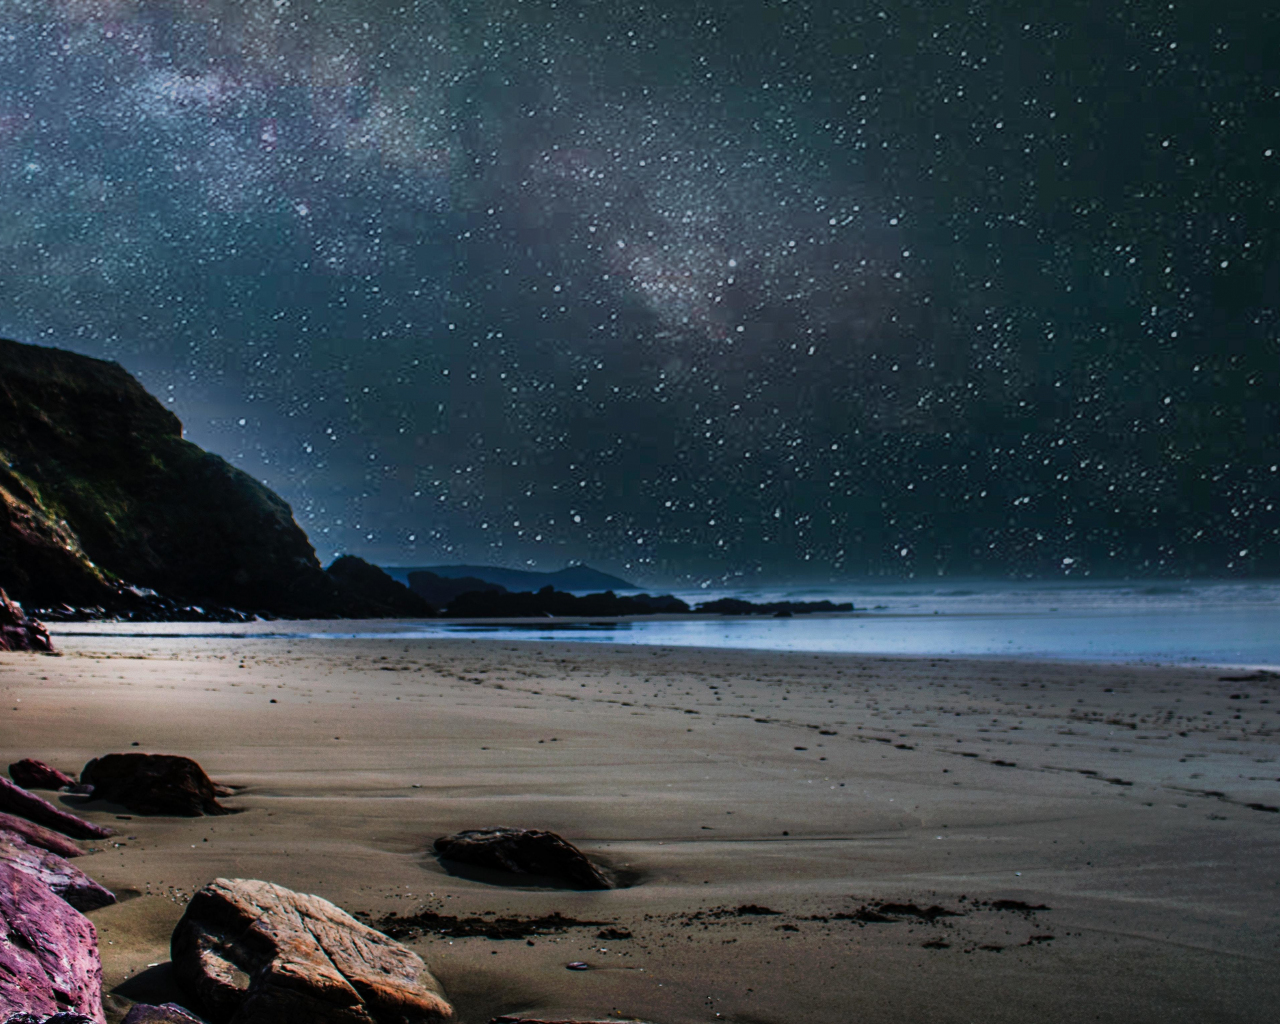 Download wallpaper 1280x1024 beach, starry night, sky, nature, standard